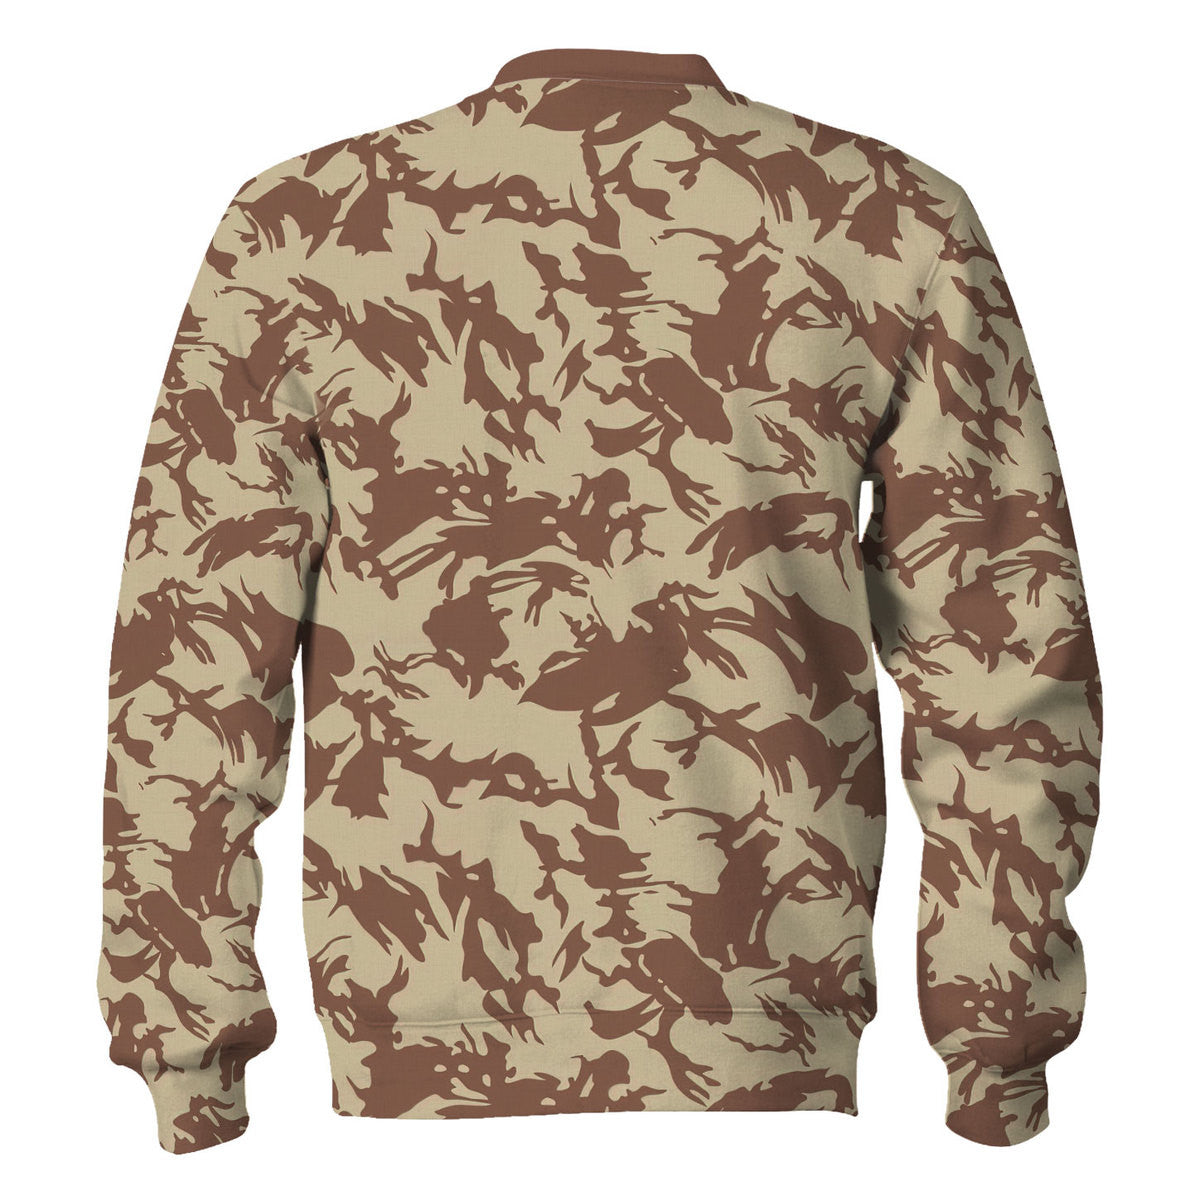 Bristish Desert (DPM) Camo Pattern Sweatshirt